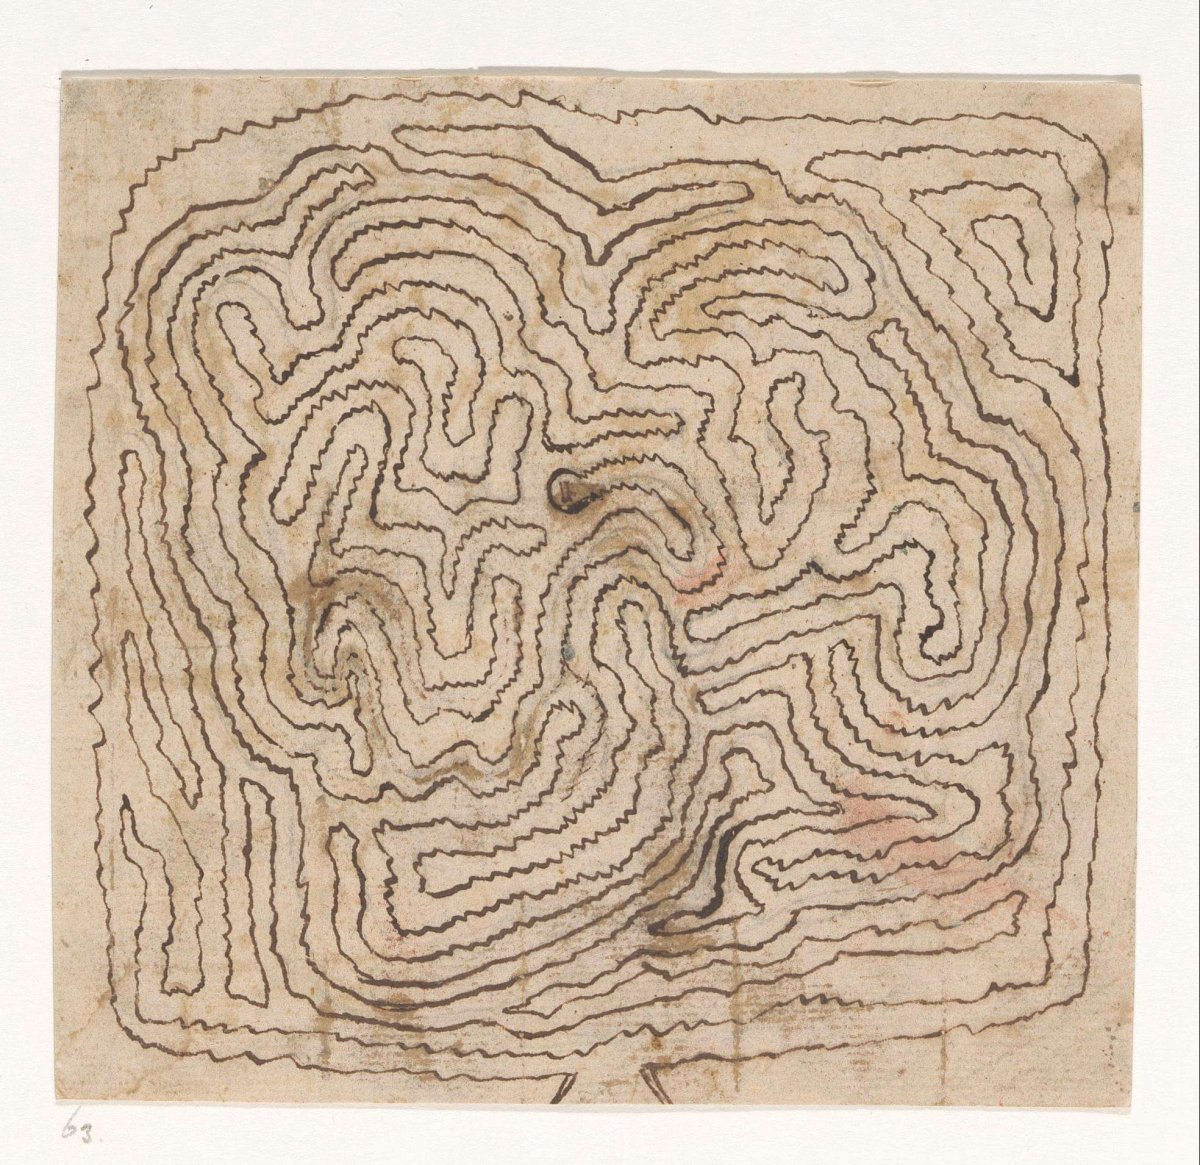 Labyrint, Jan Brandes, 1770 - 1808